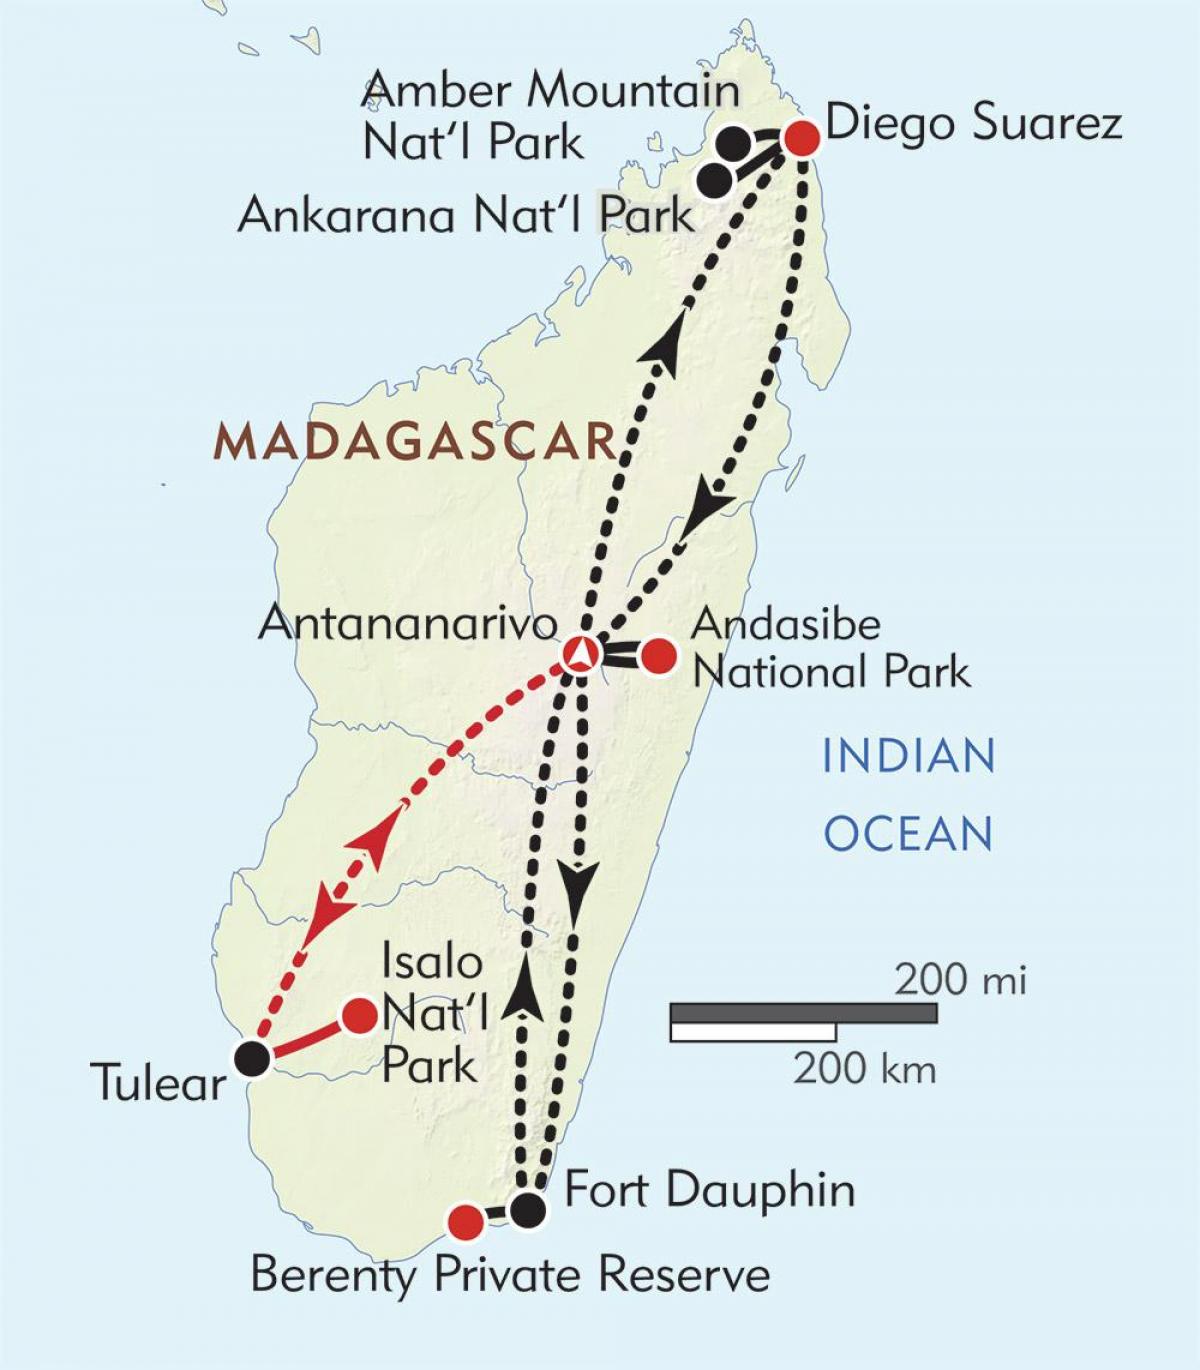 آنتاناناریوو ماداگاسکار نقشه